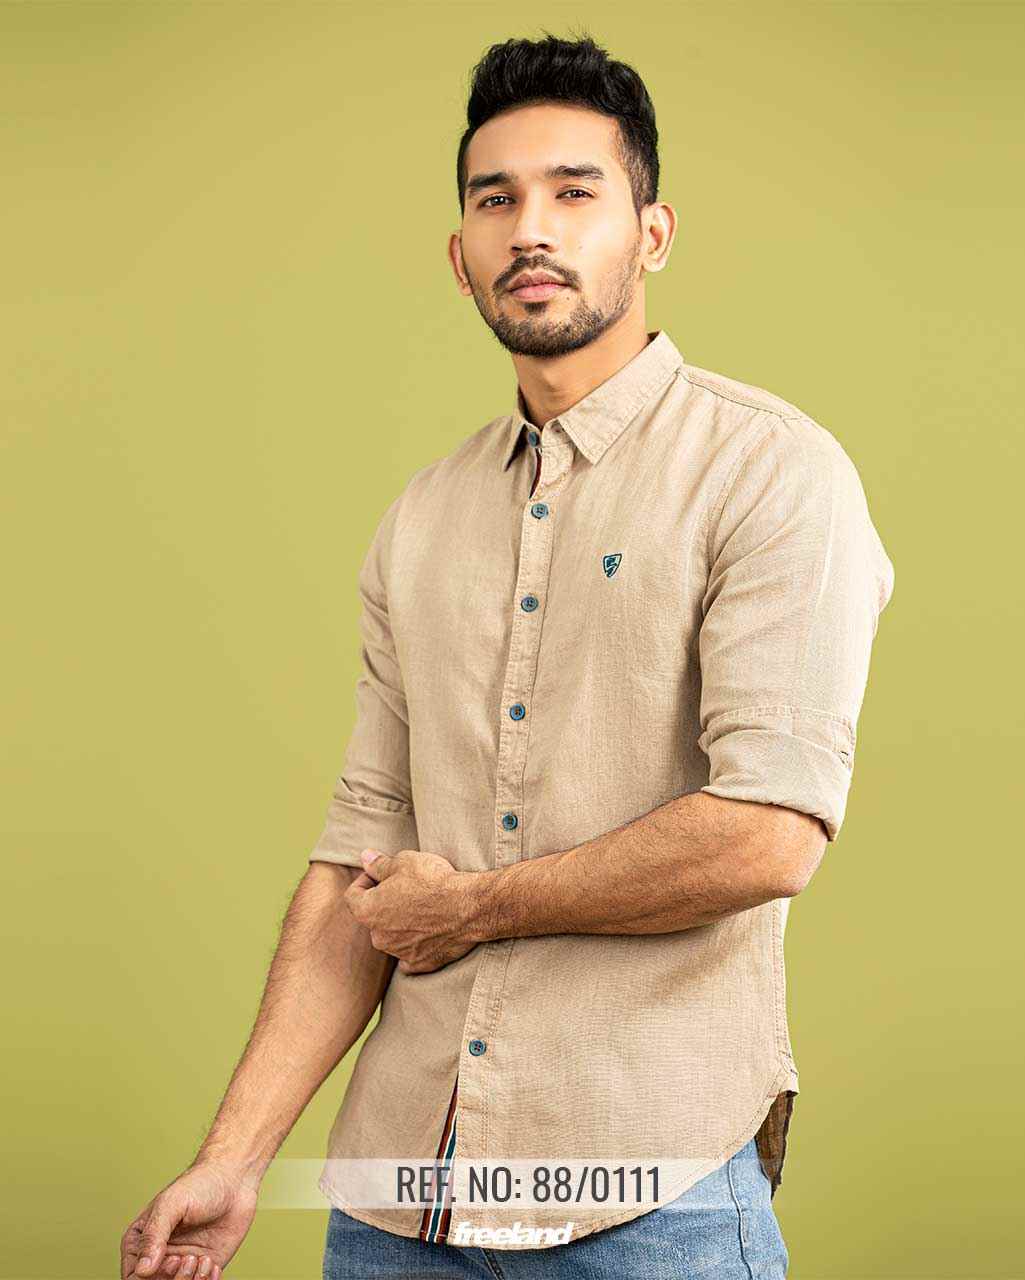 Solid Remi Cotton Shirt @freeland.com.bd